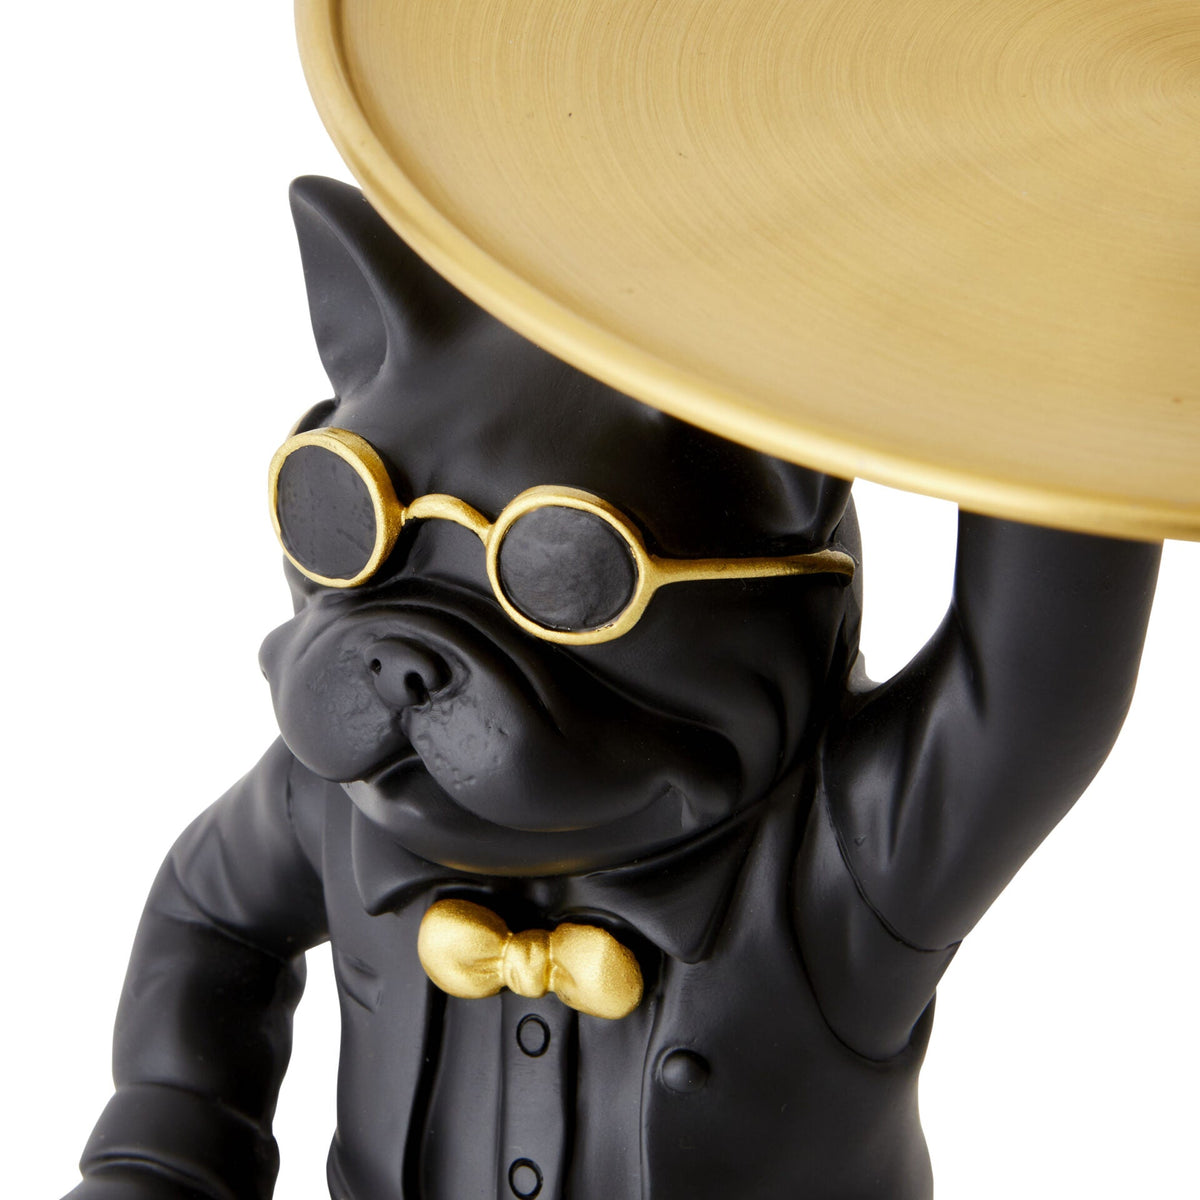 Butler Bulldog Trinket Tray Statue with Umbrella - Black - Notbrand